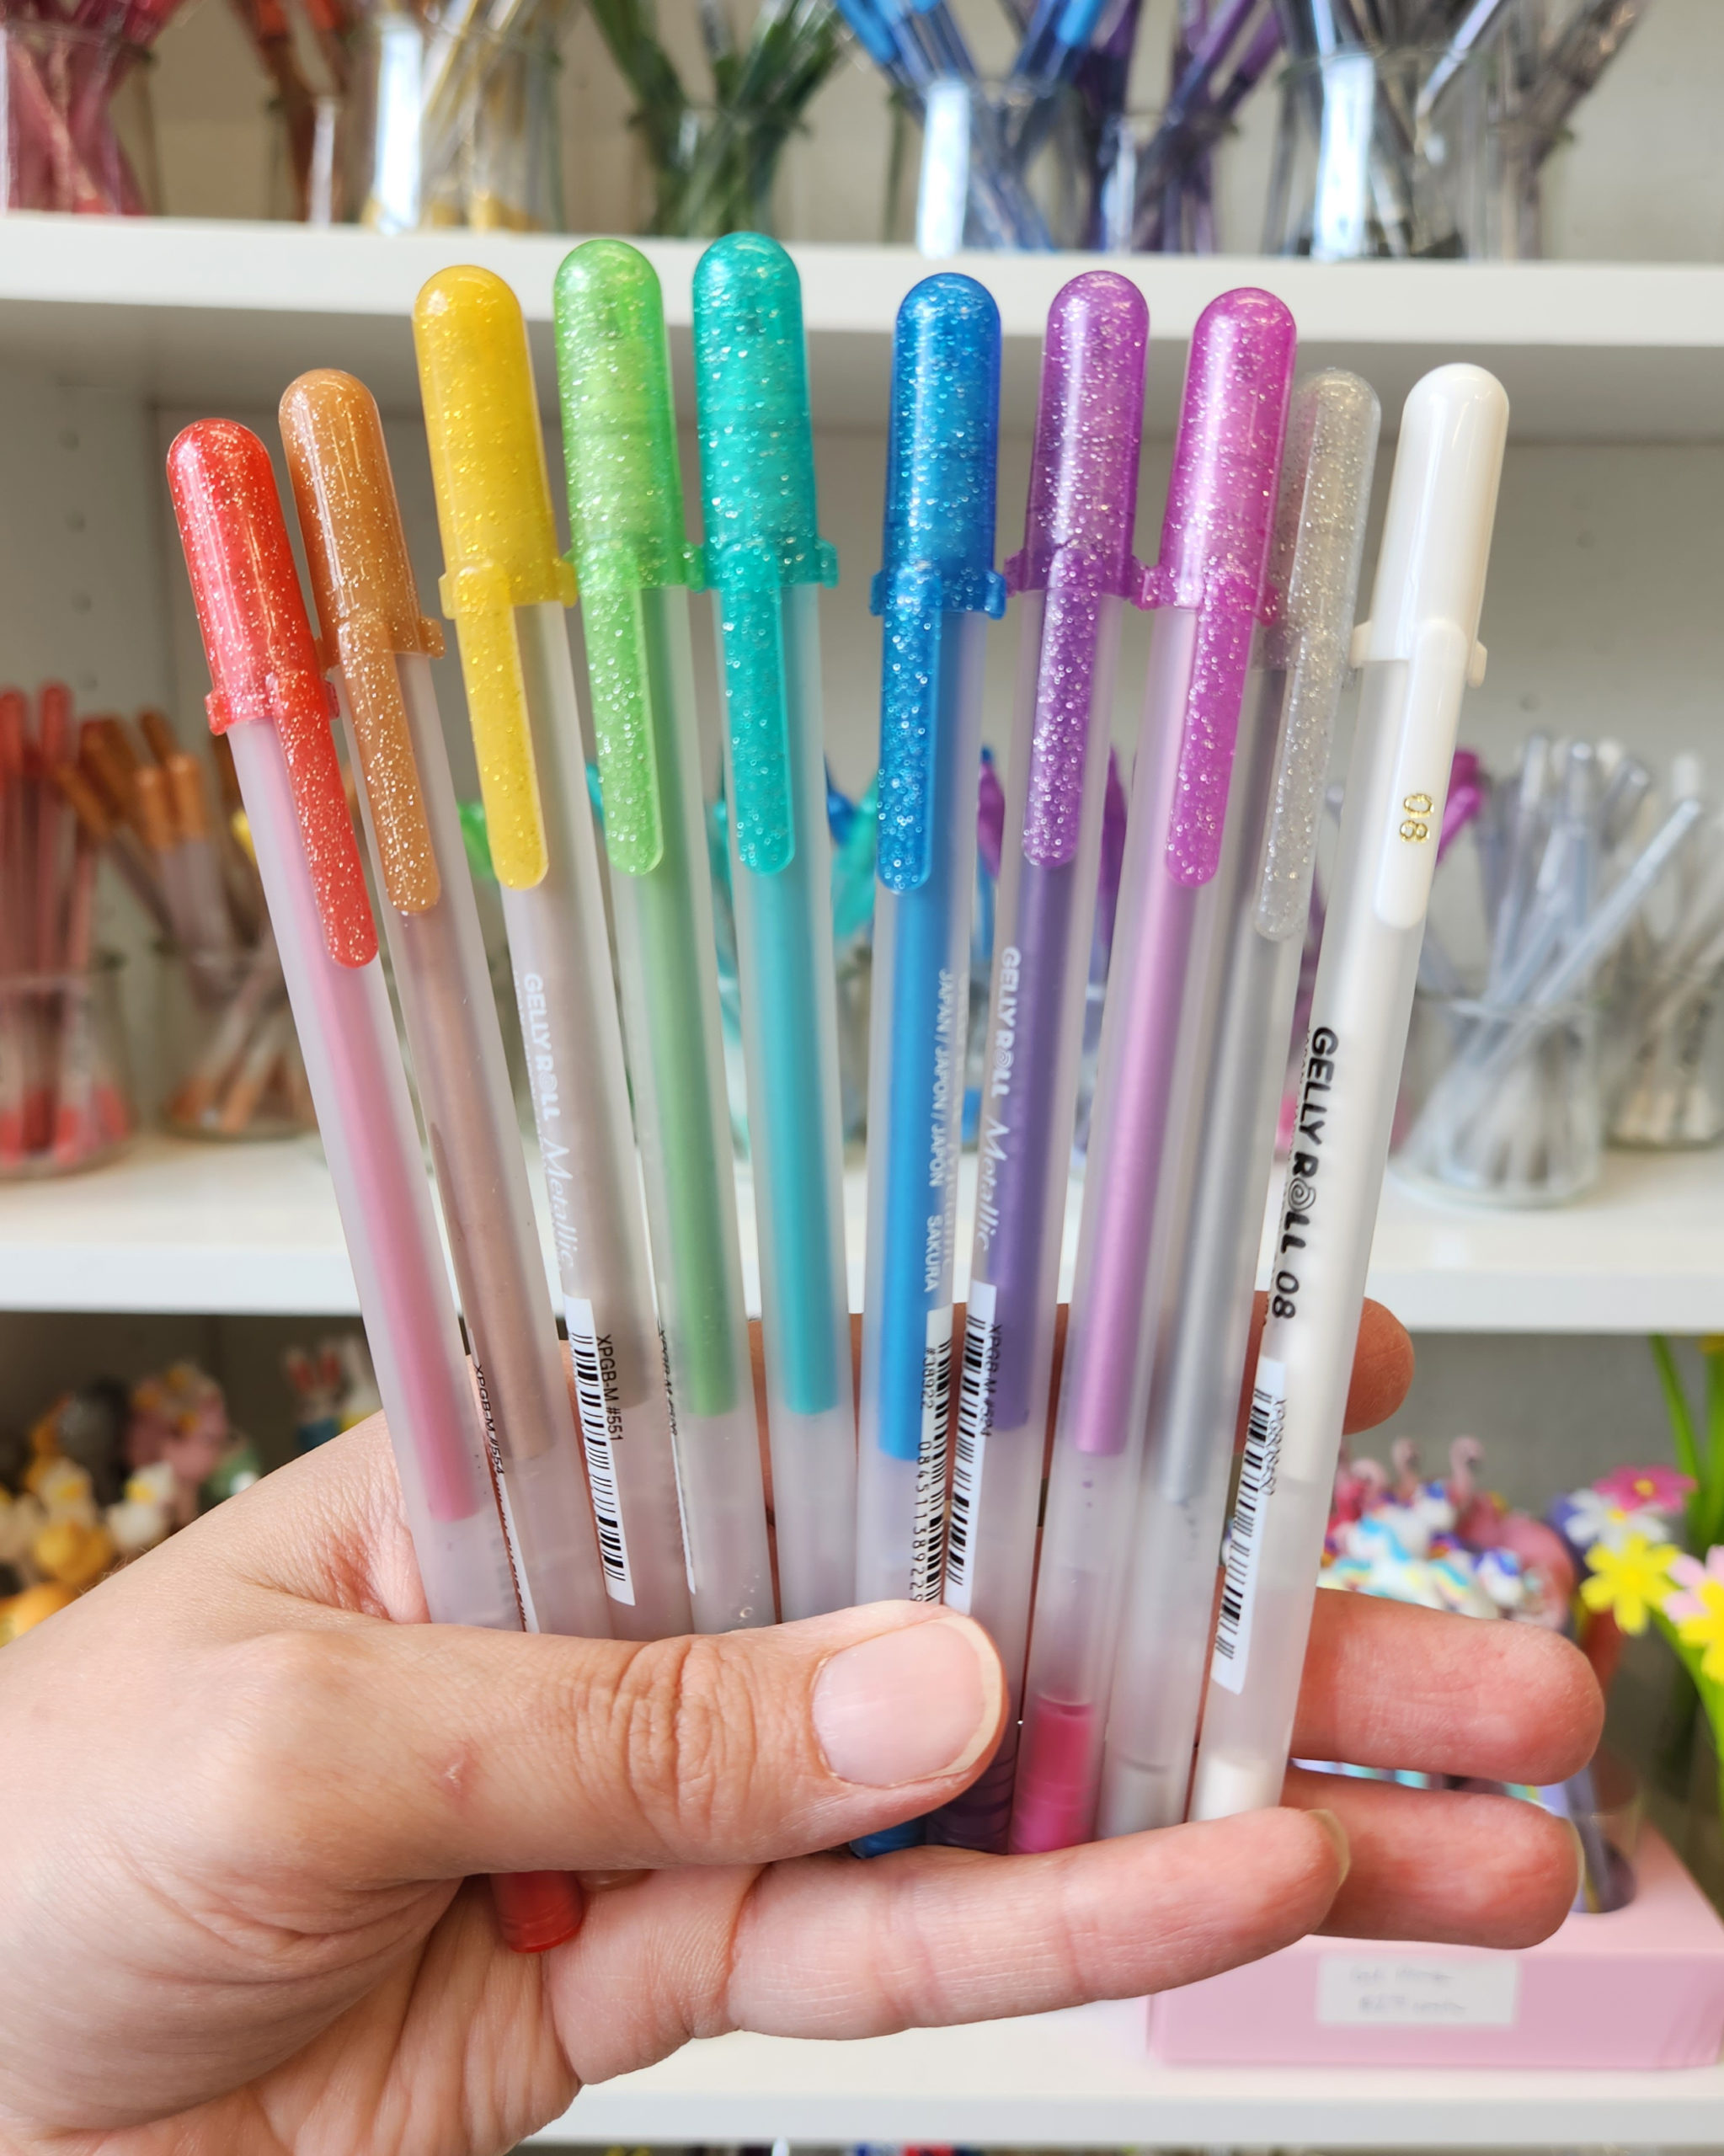 Sakura Gelly Roll Pen Set, 5-Colors, Dark Metallic